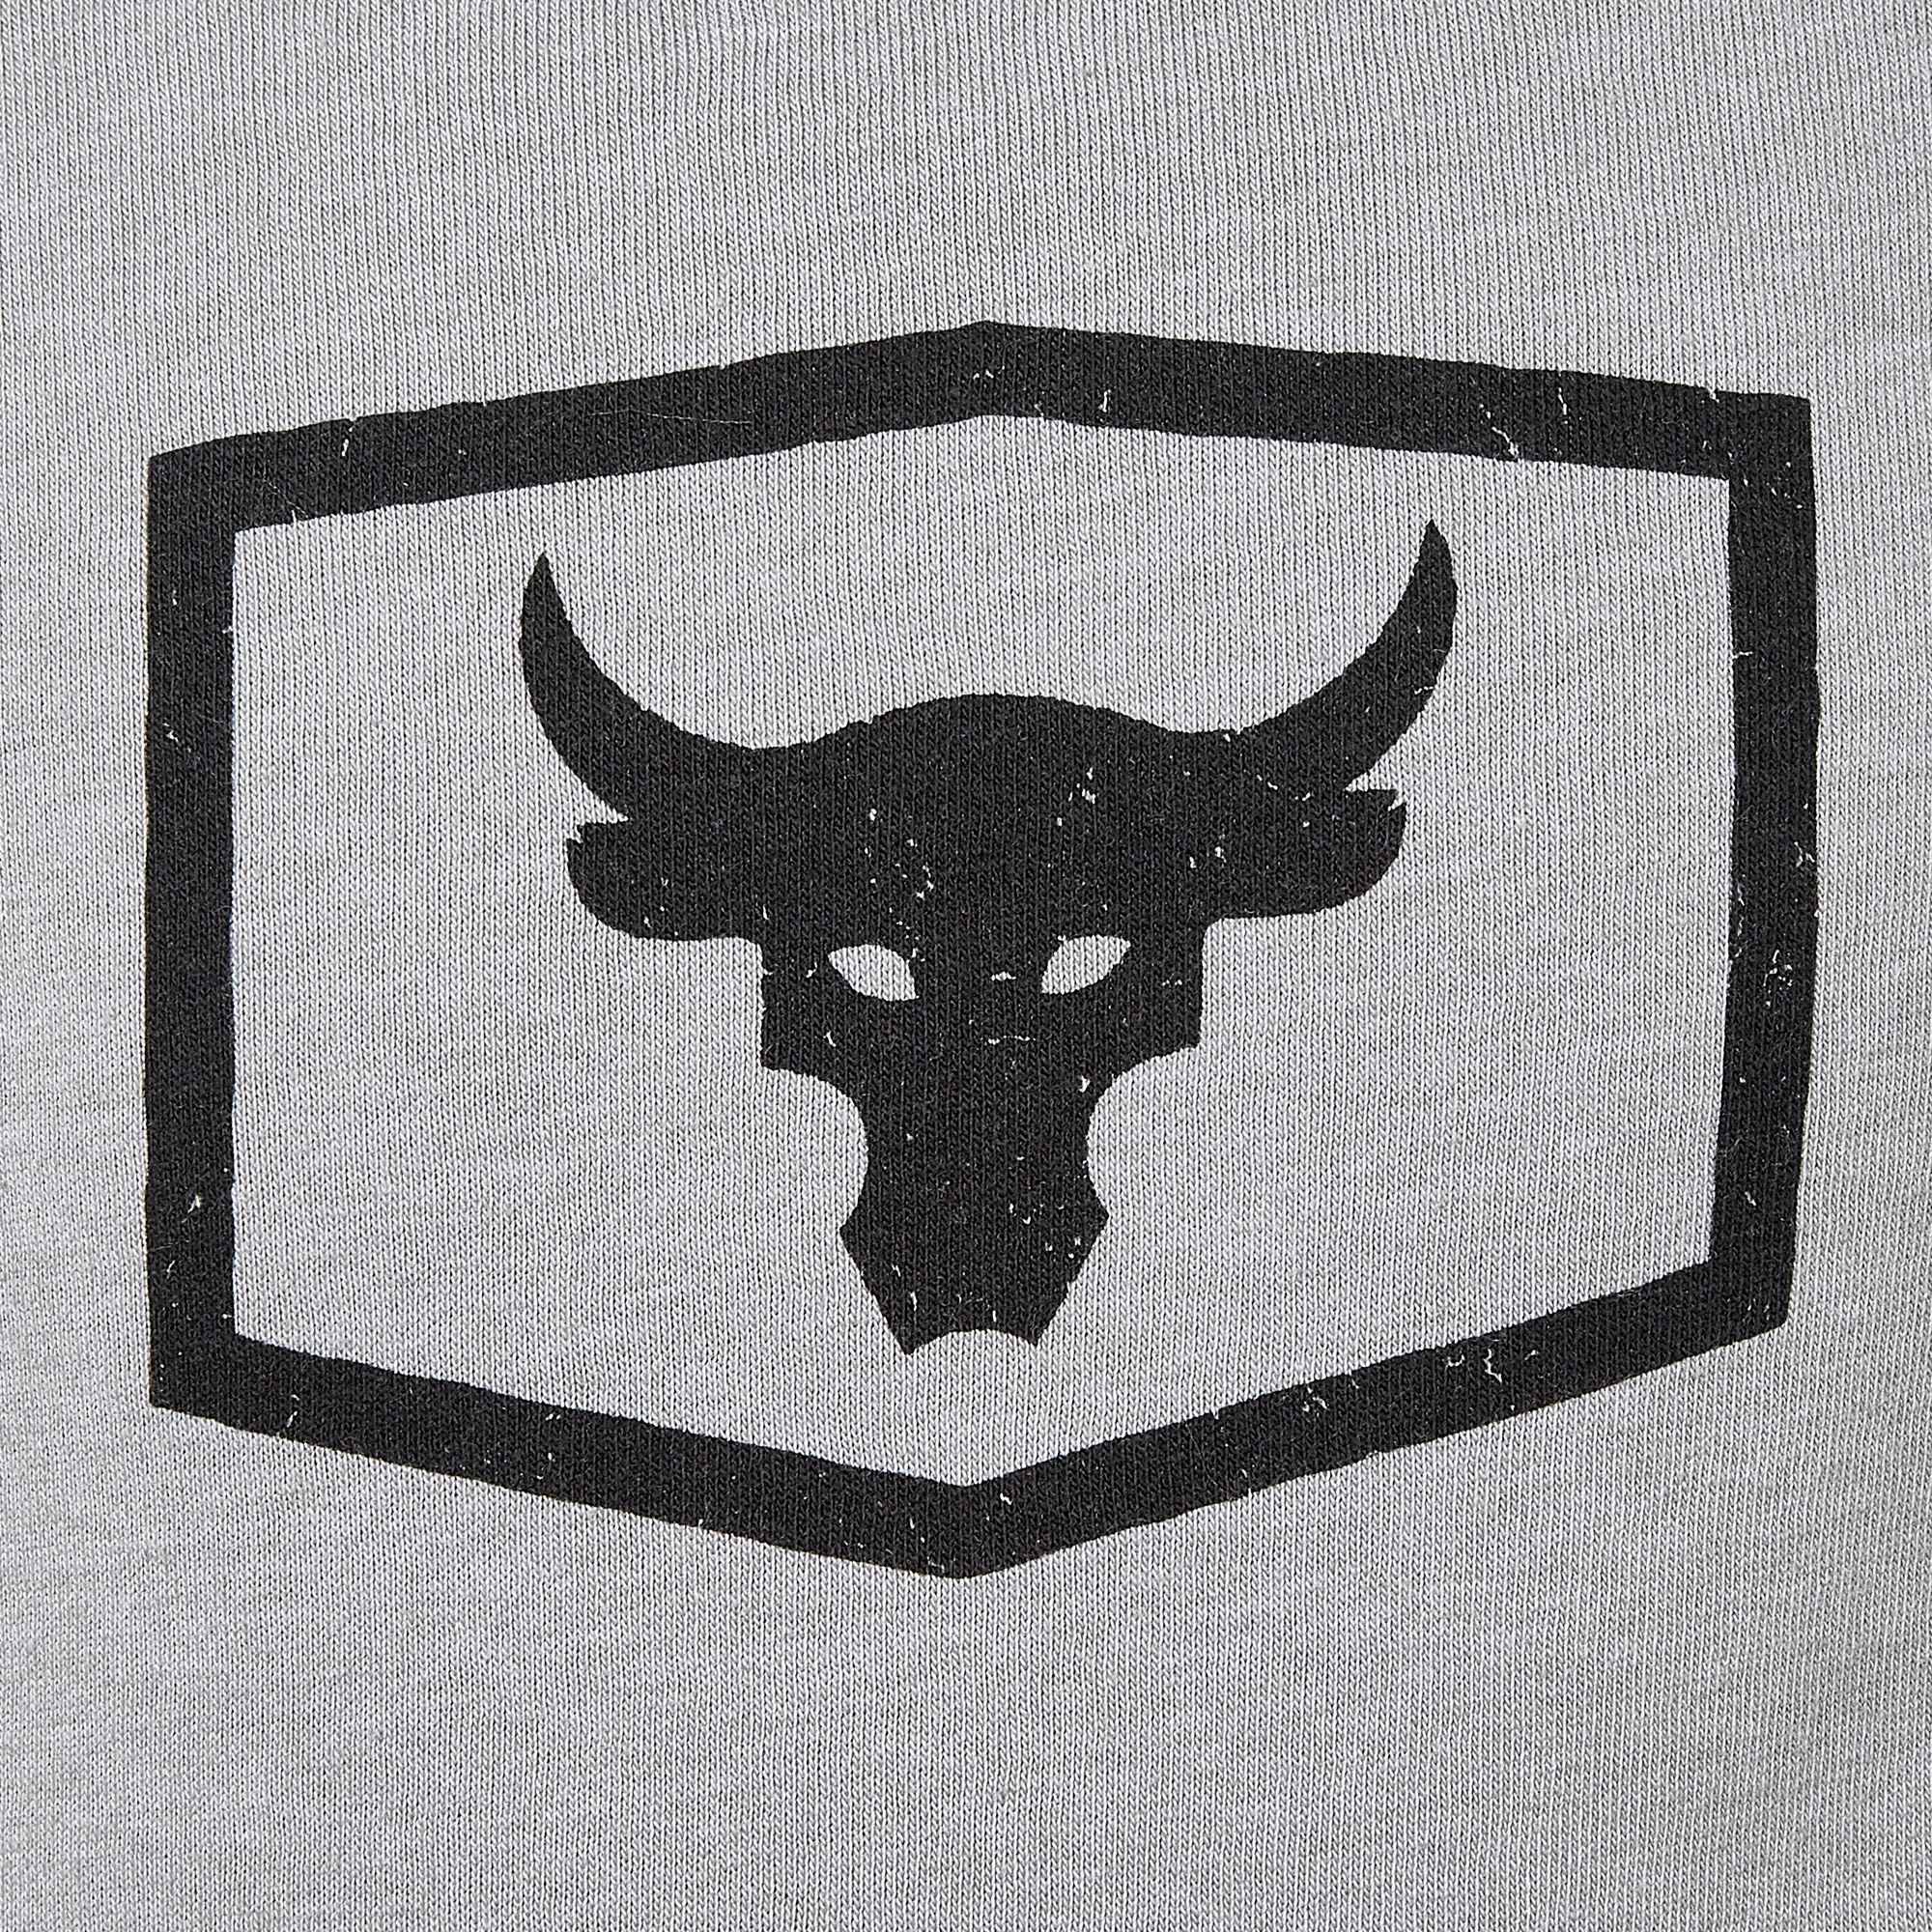 project rock bull logo